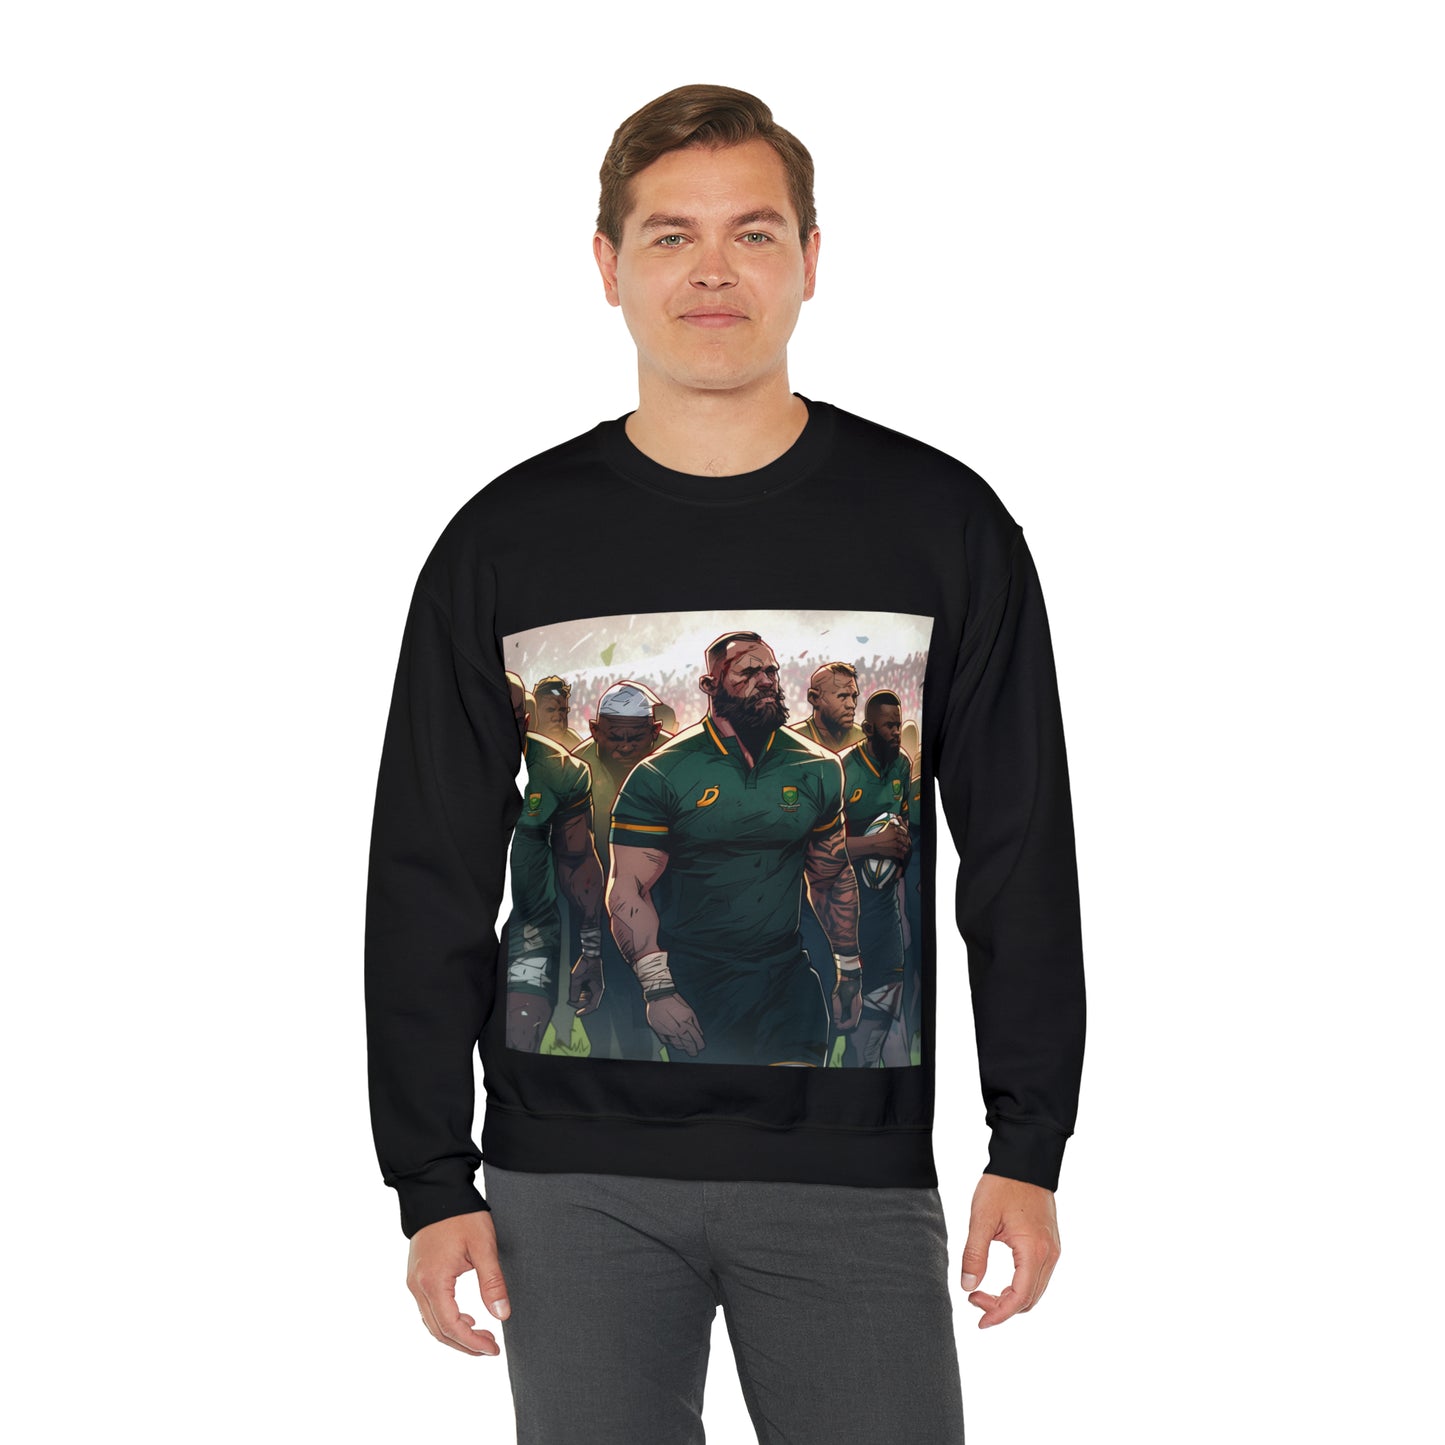 Serious Boks - black sweatshirt